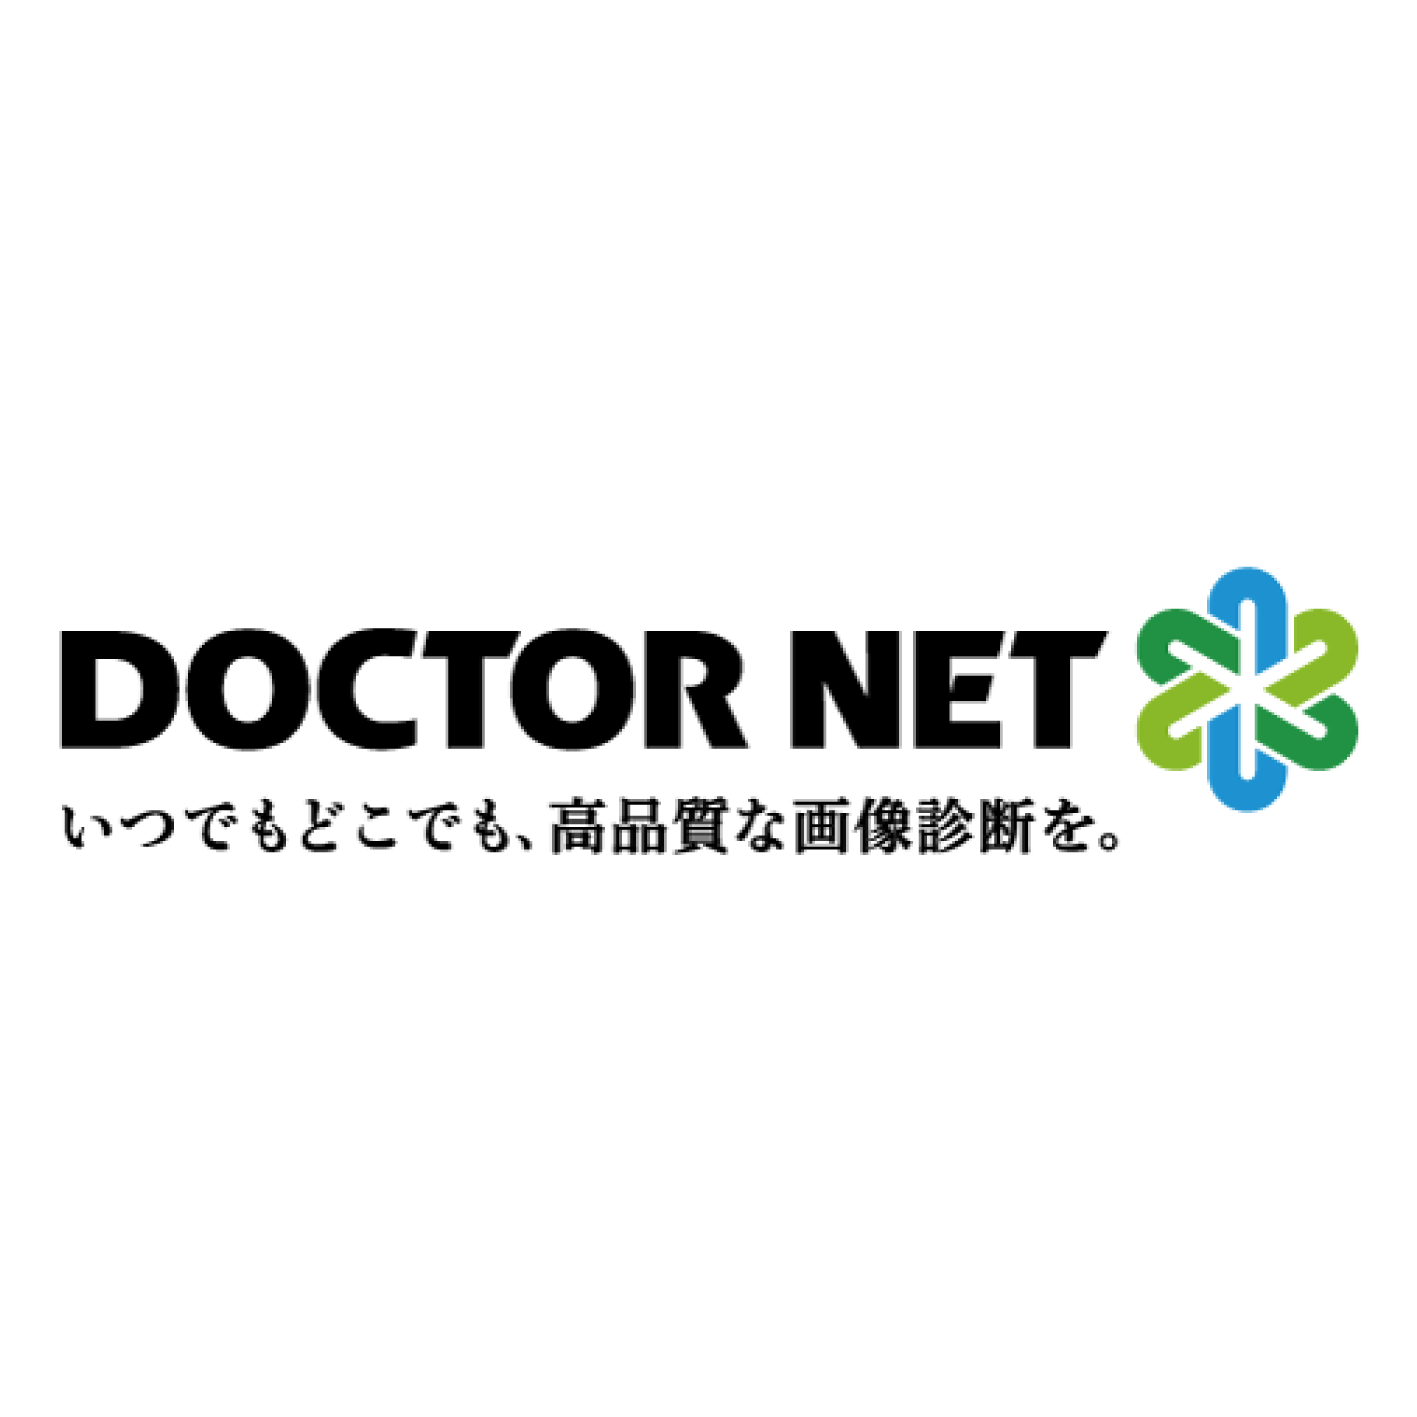 Doctor-NET Inc.